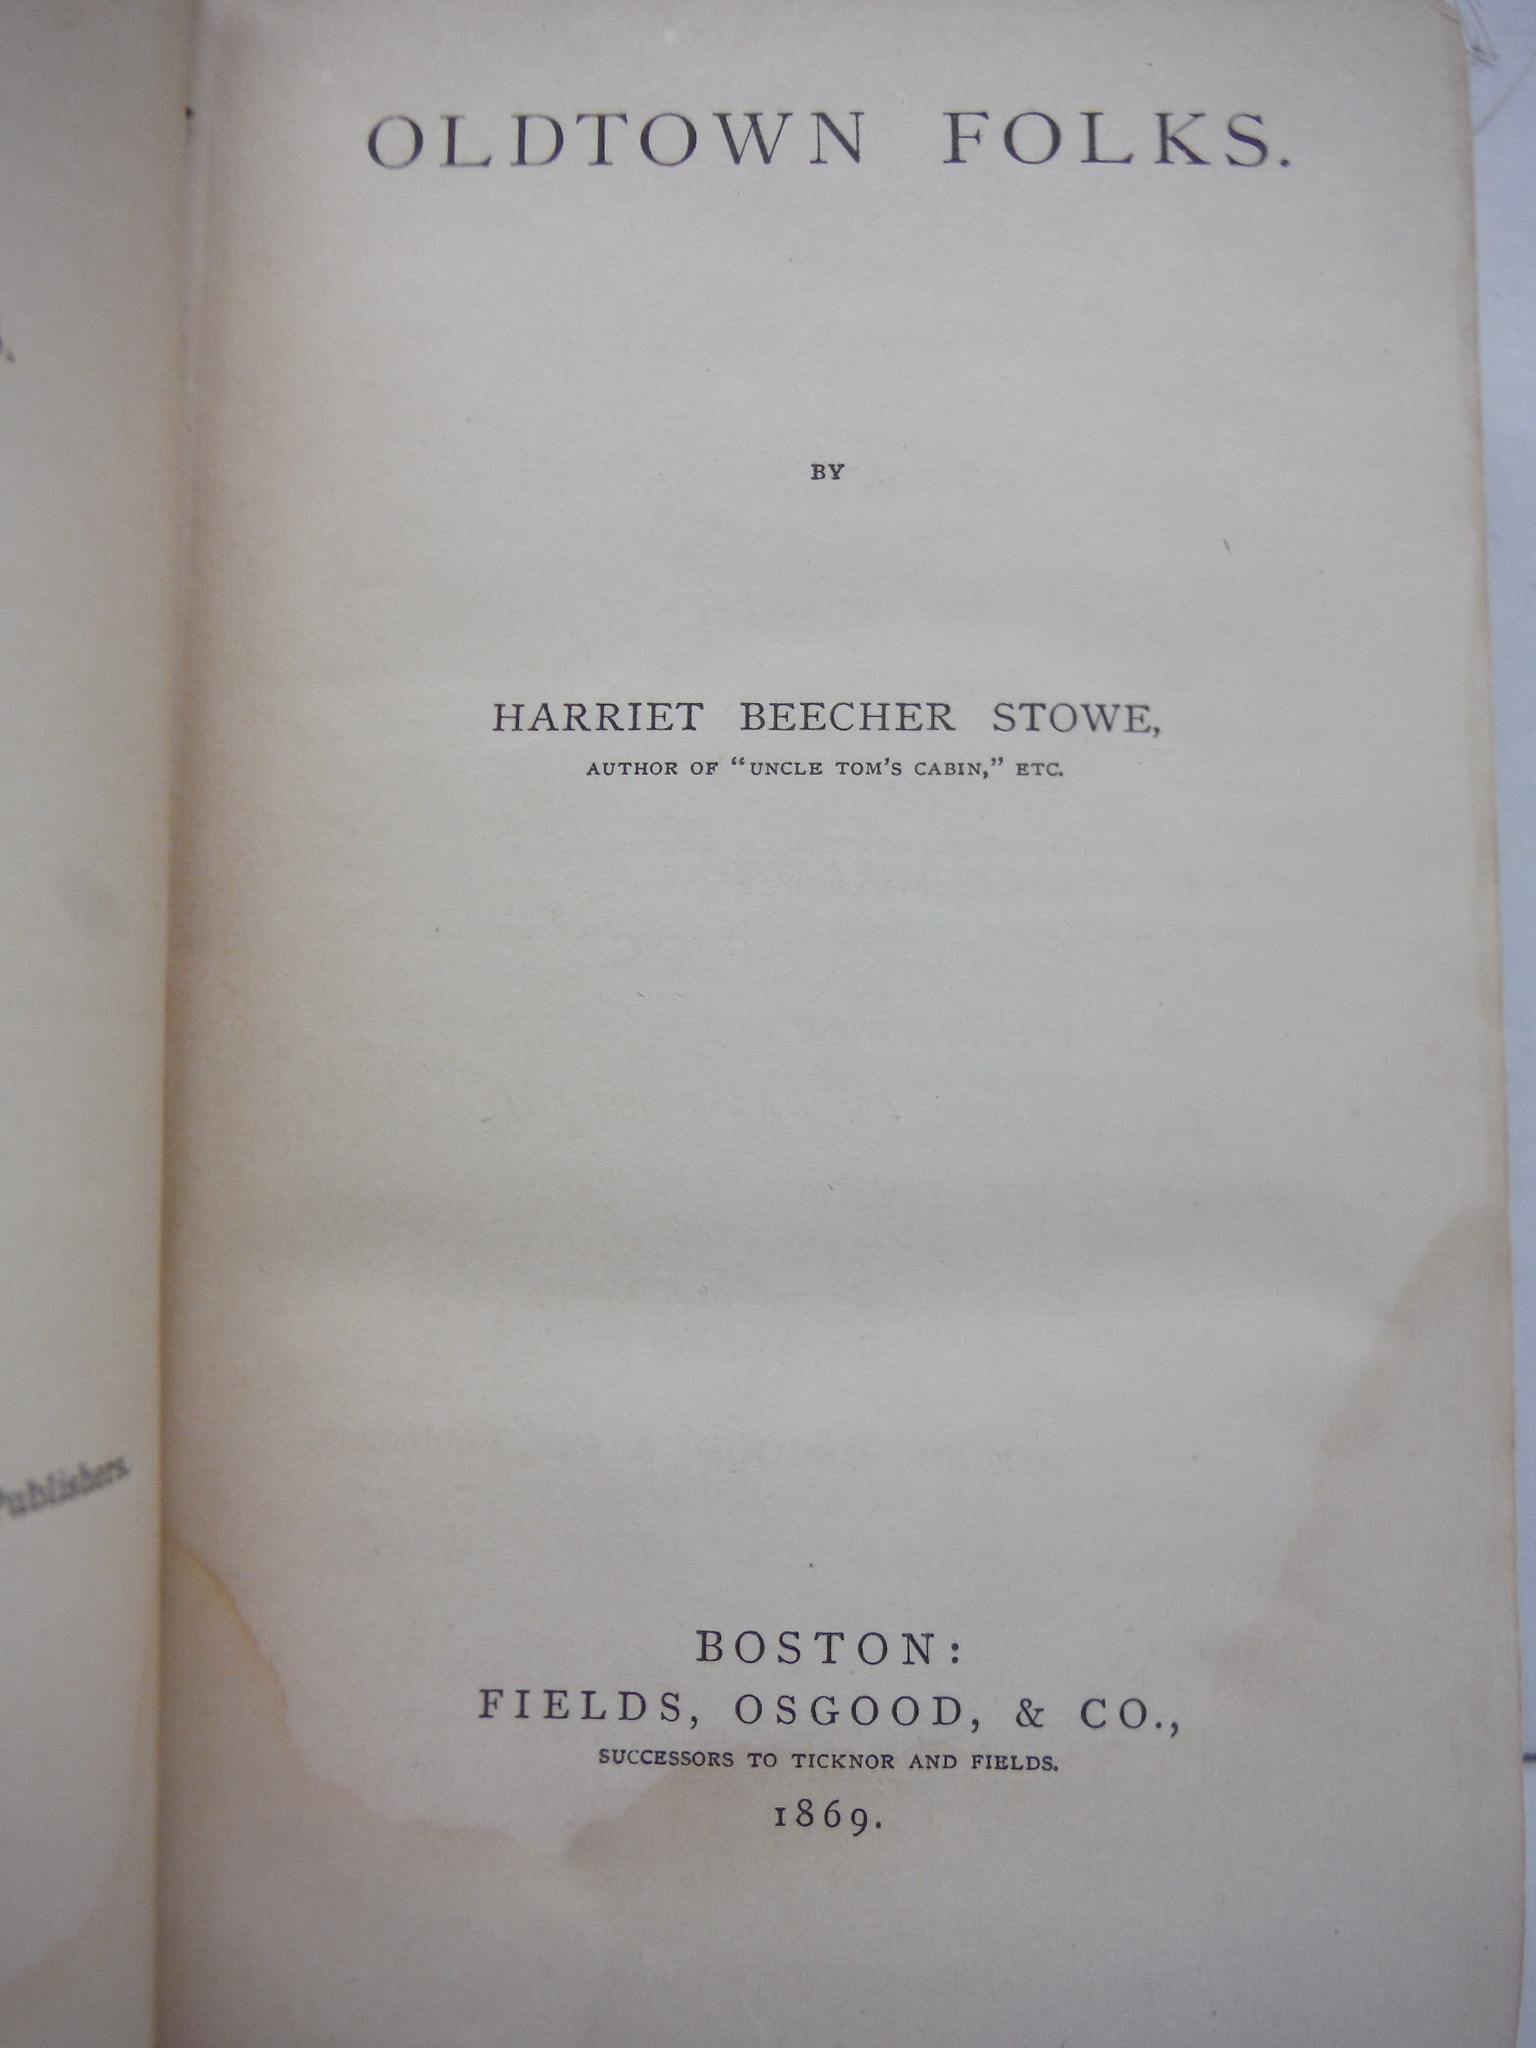 Image 1 of OLDTOWN FOLKS. Mrs. Stowe's Novels. Uniform Editions